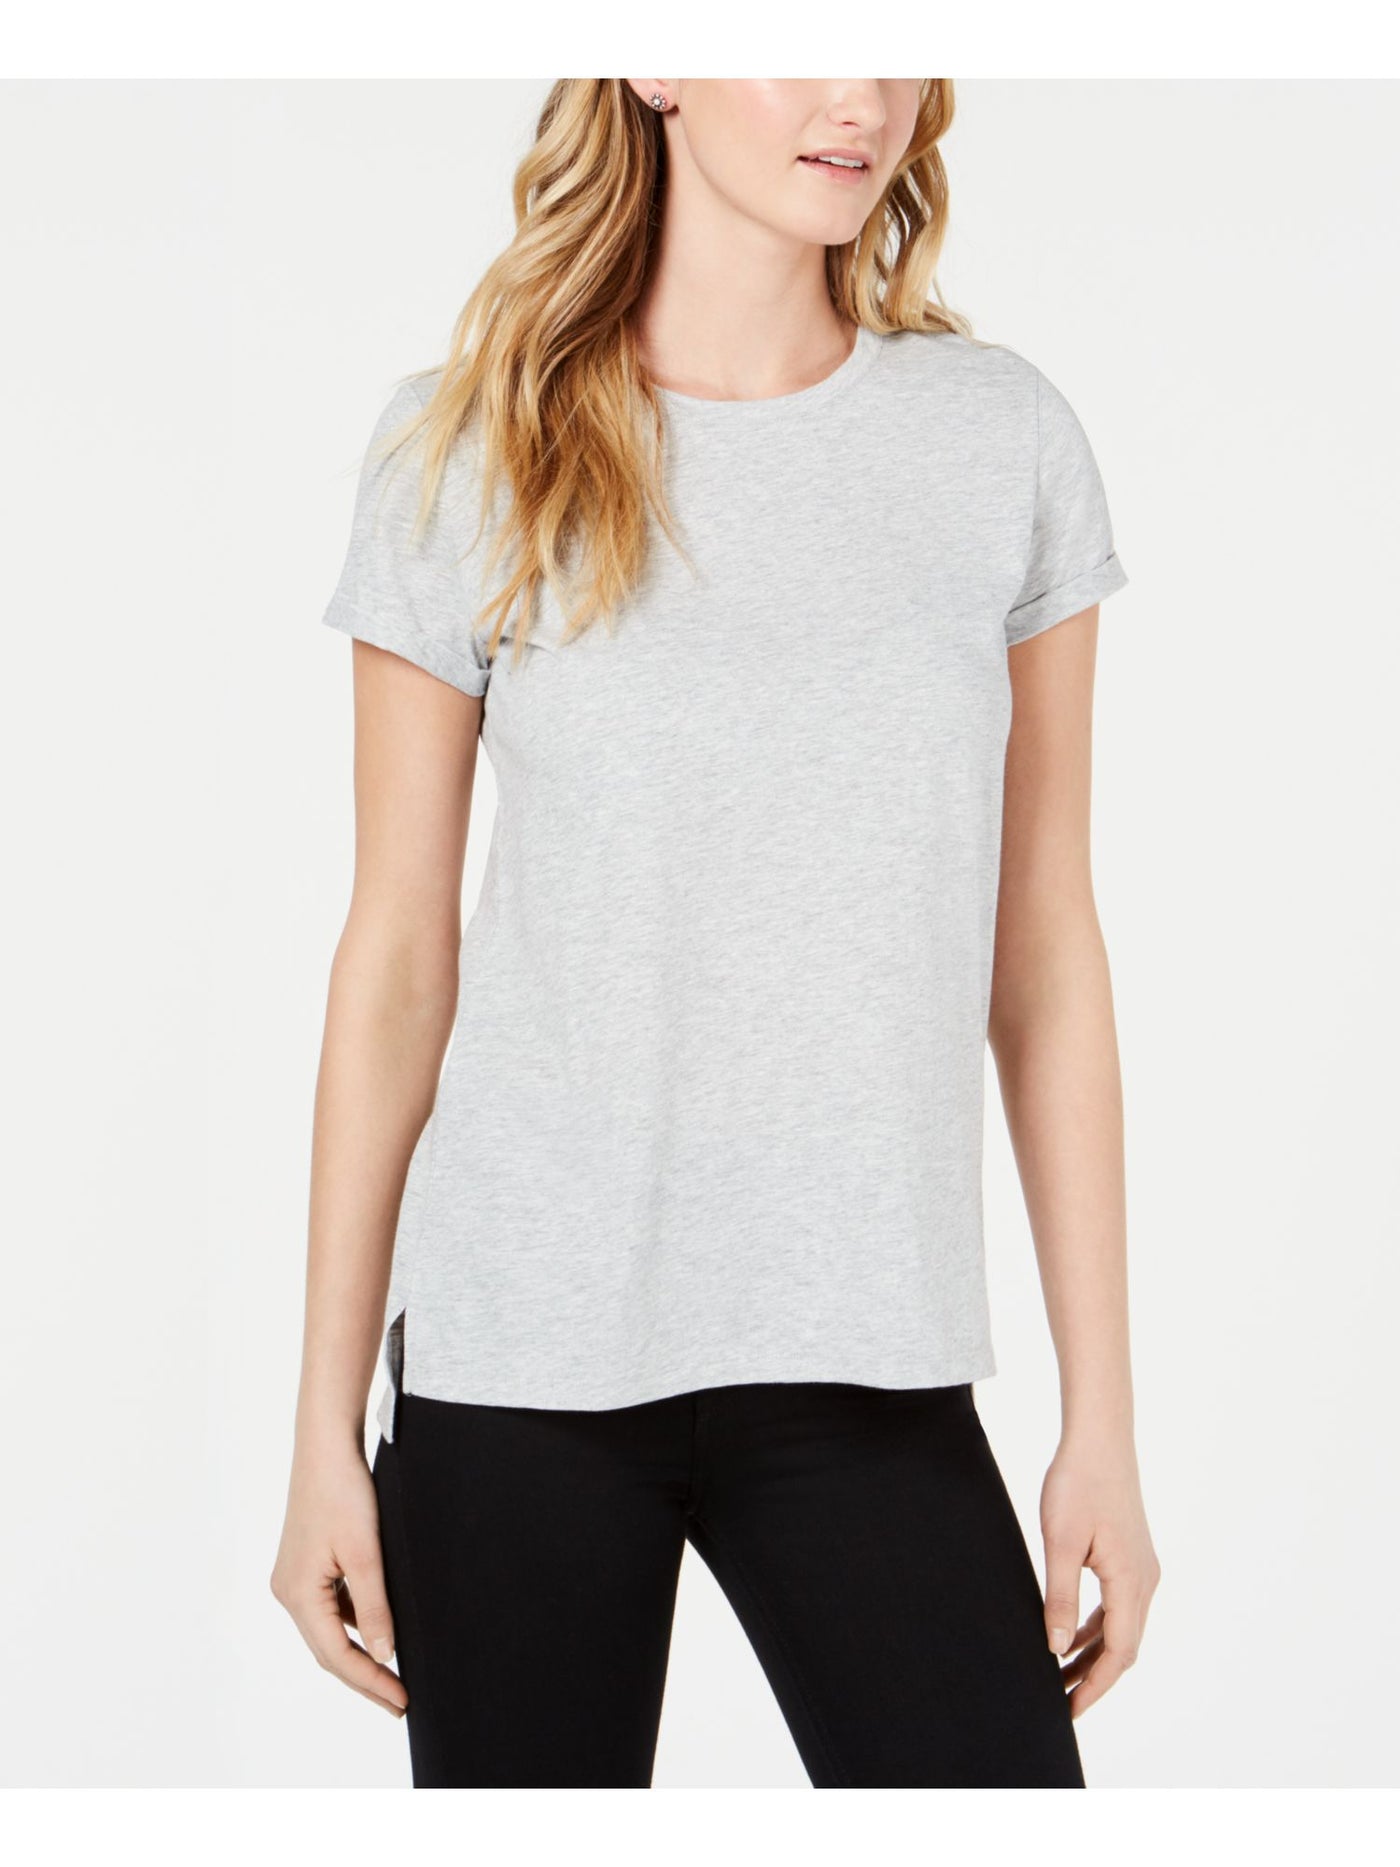 MAISON JULES Womens Gray Heather Short Sleeve Crew Neck T-Shirt XS